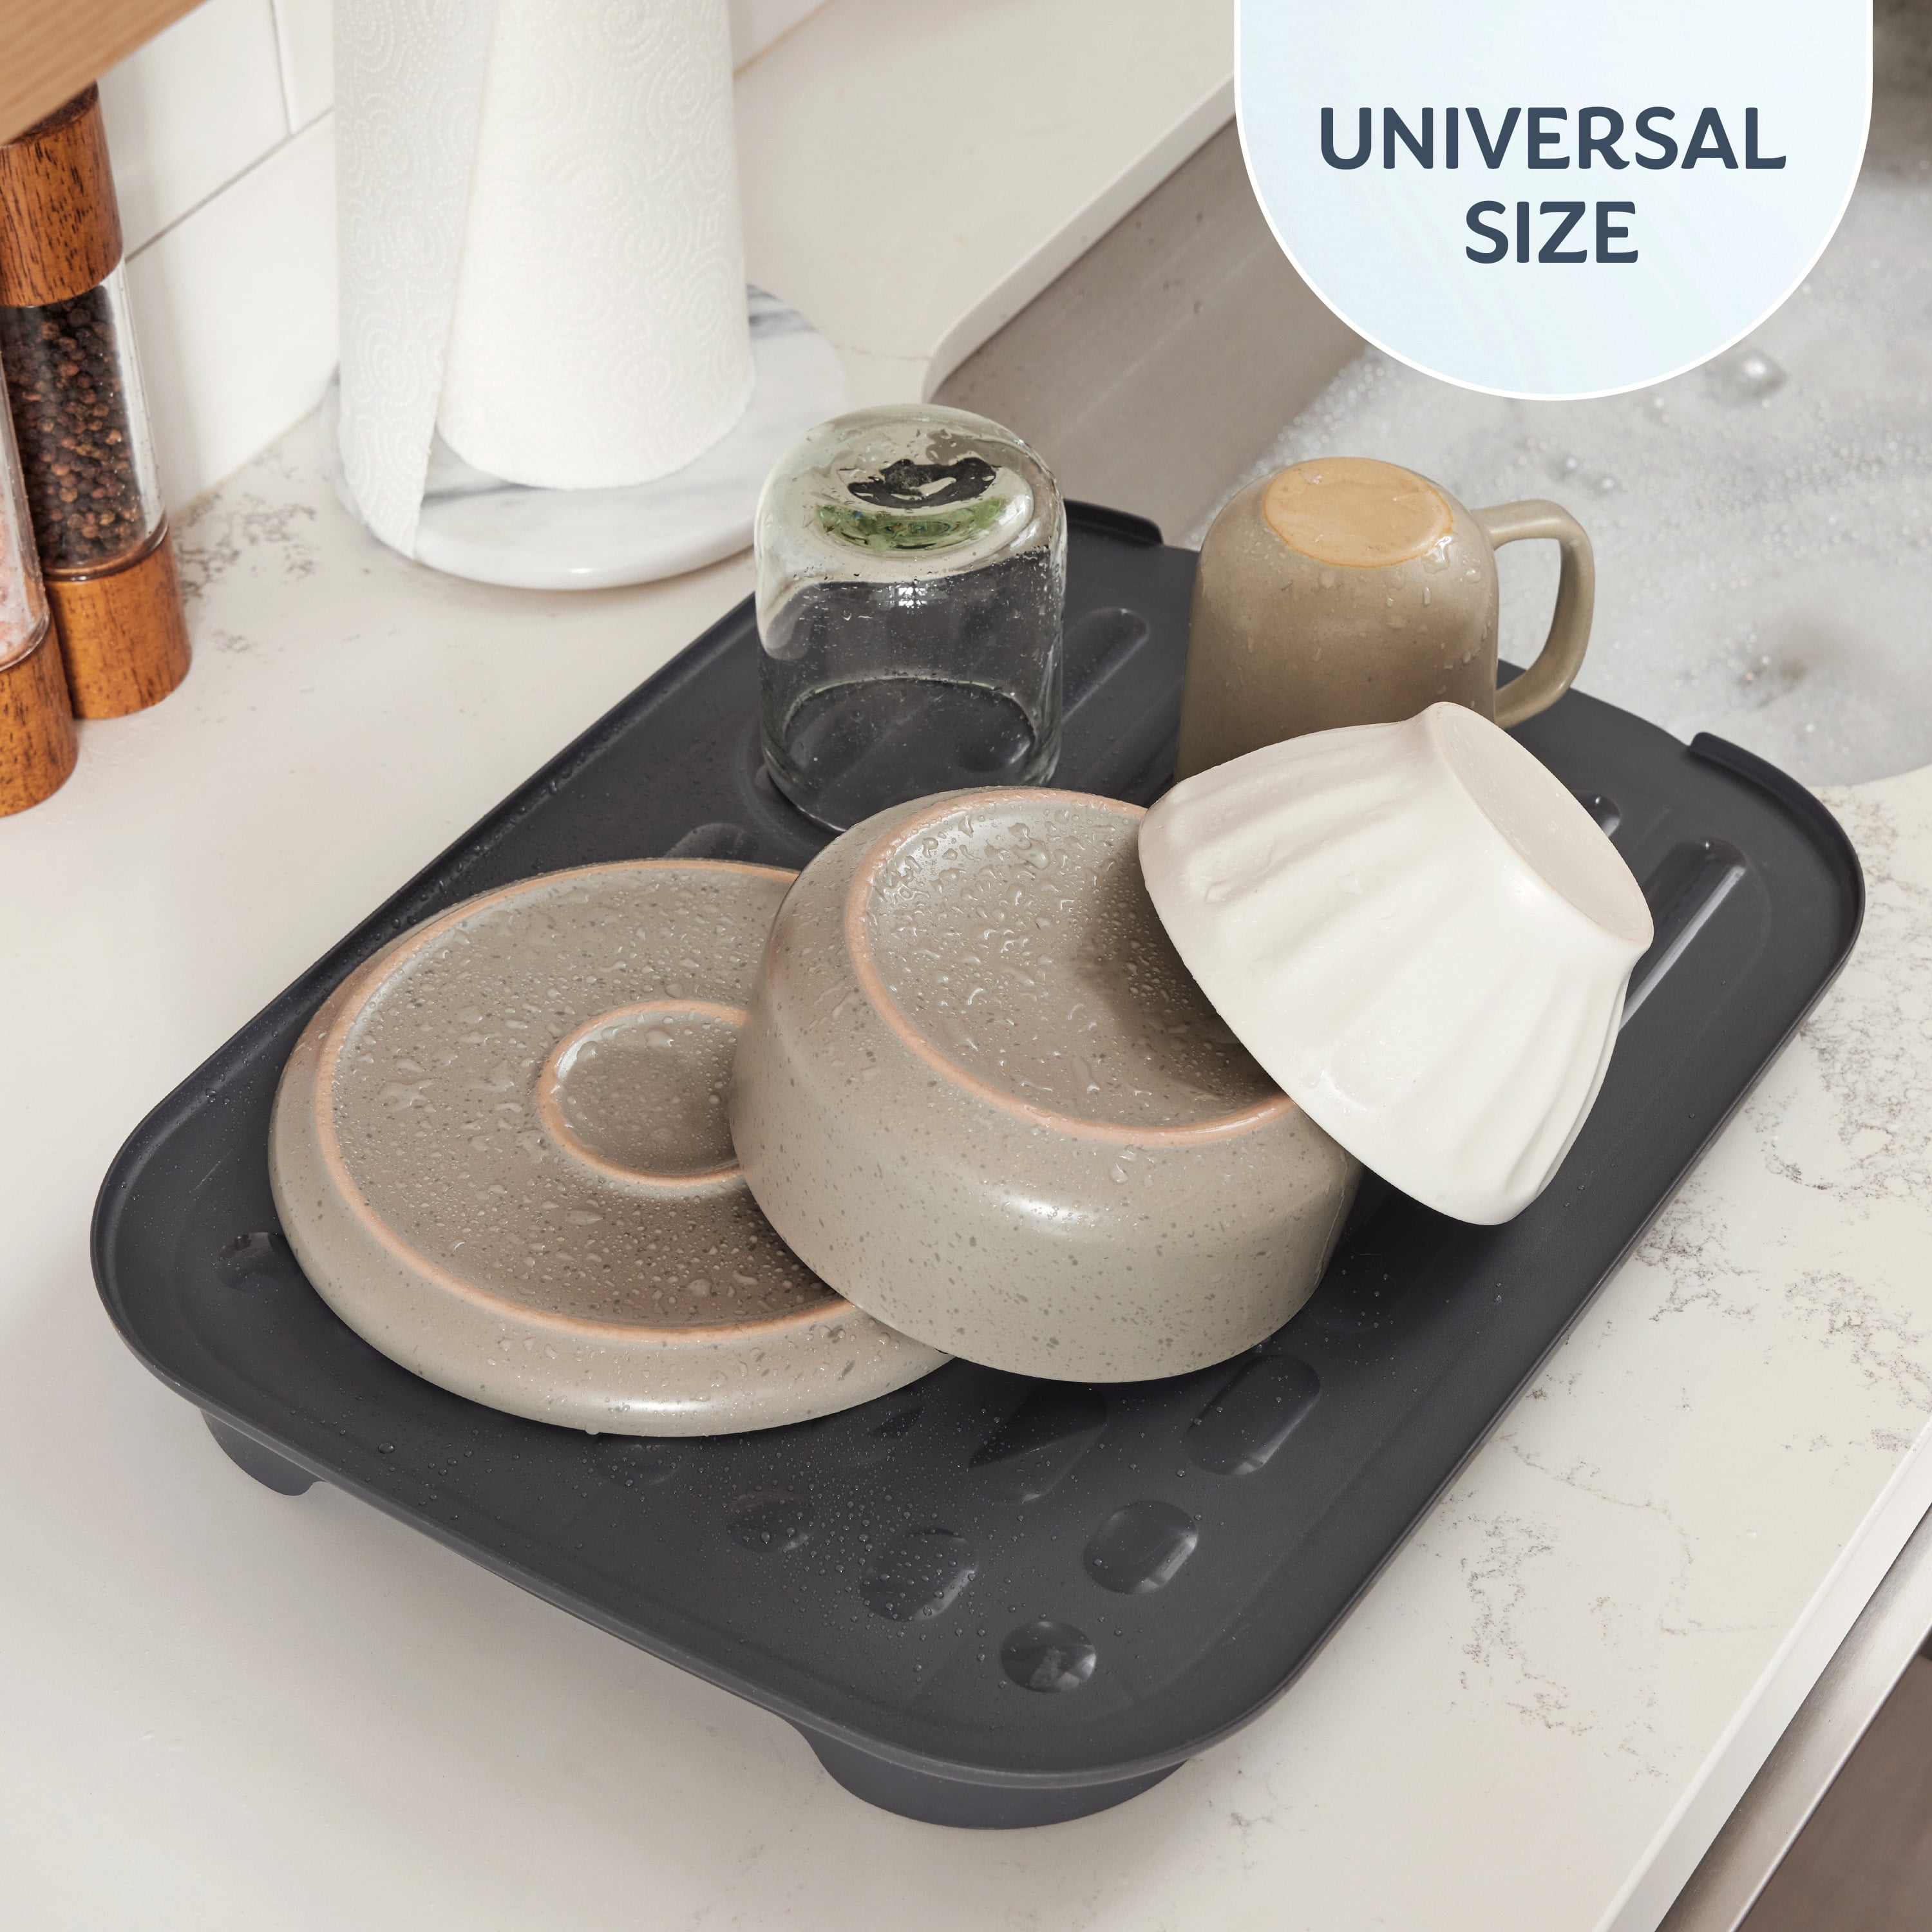 Drain Board,Dish Drying Mat Soft Flexible Rubber Heat Resistant Nonslip BPA  Free Eco Friendly Wide Application Dish Drying Pad[green] 